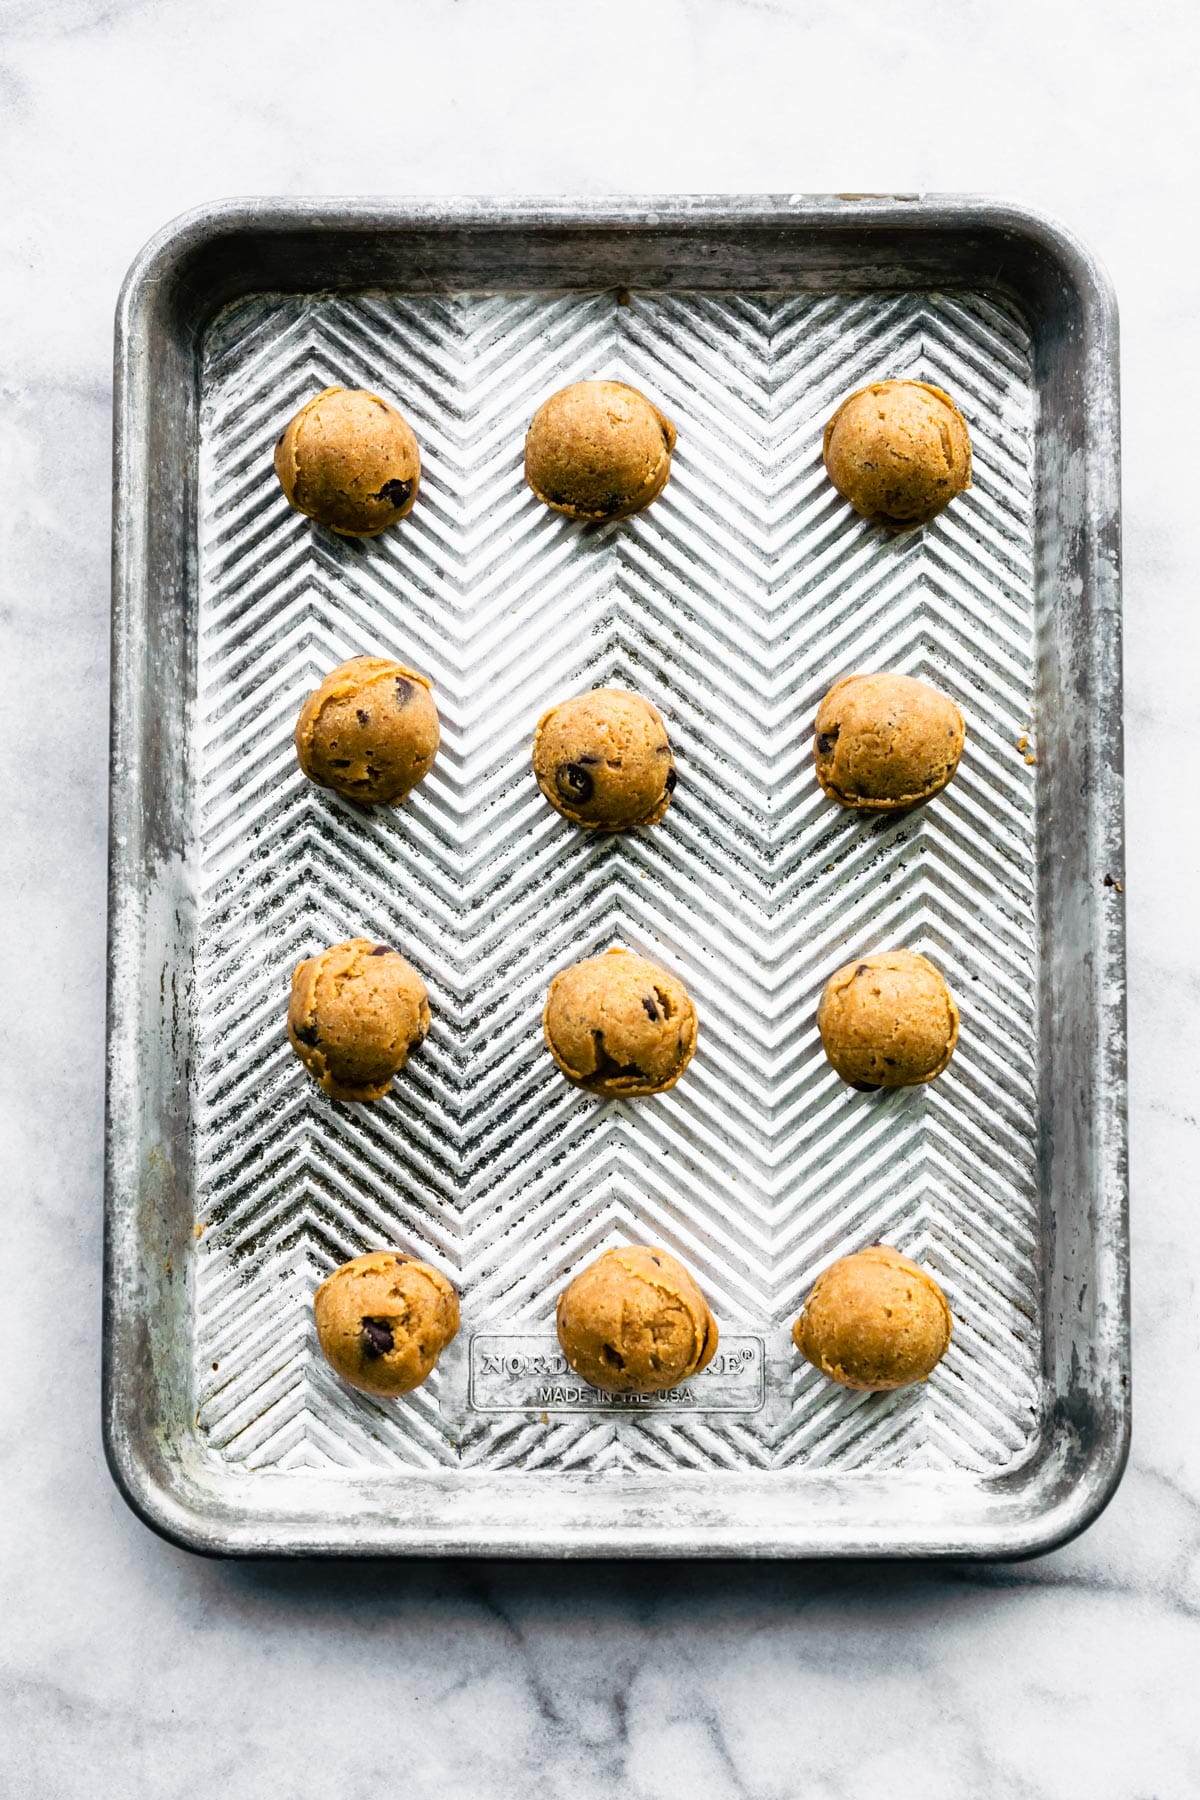 Twelve unbaked gluten free chocolate chip cookie dough balls on a baking sheet.